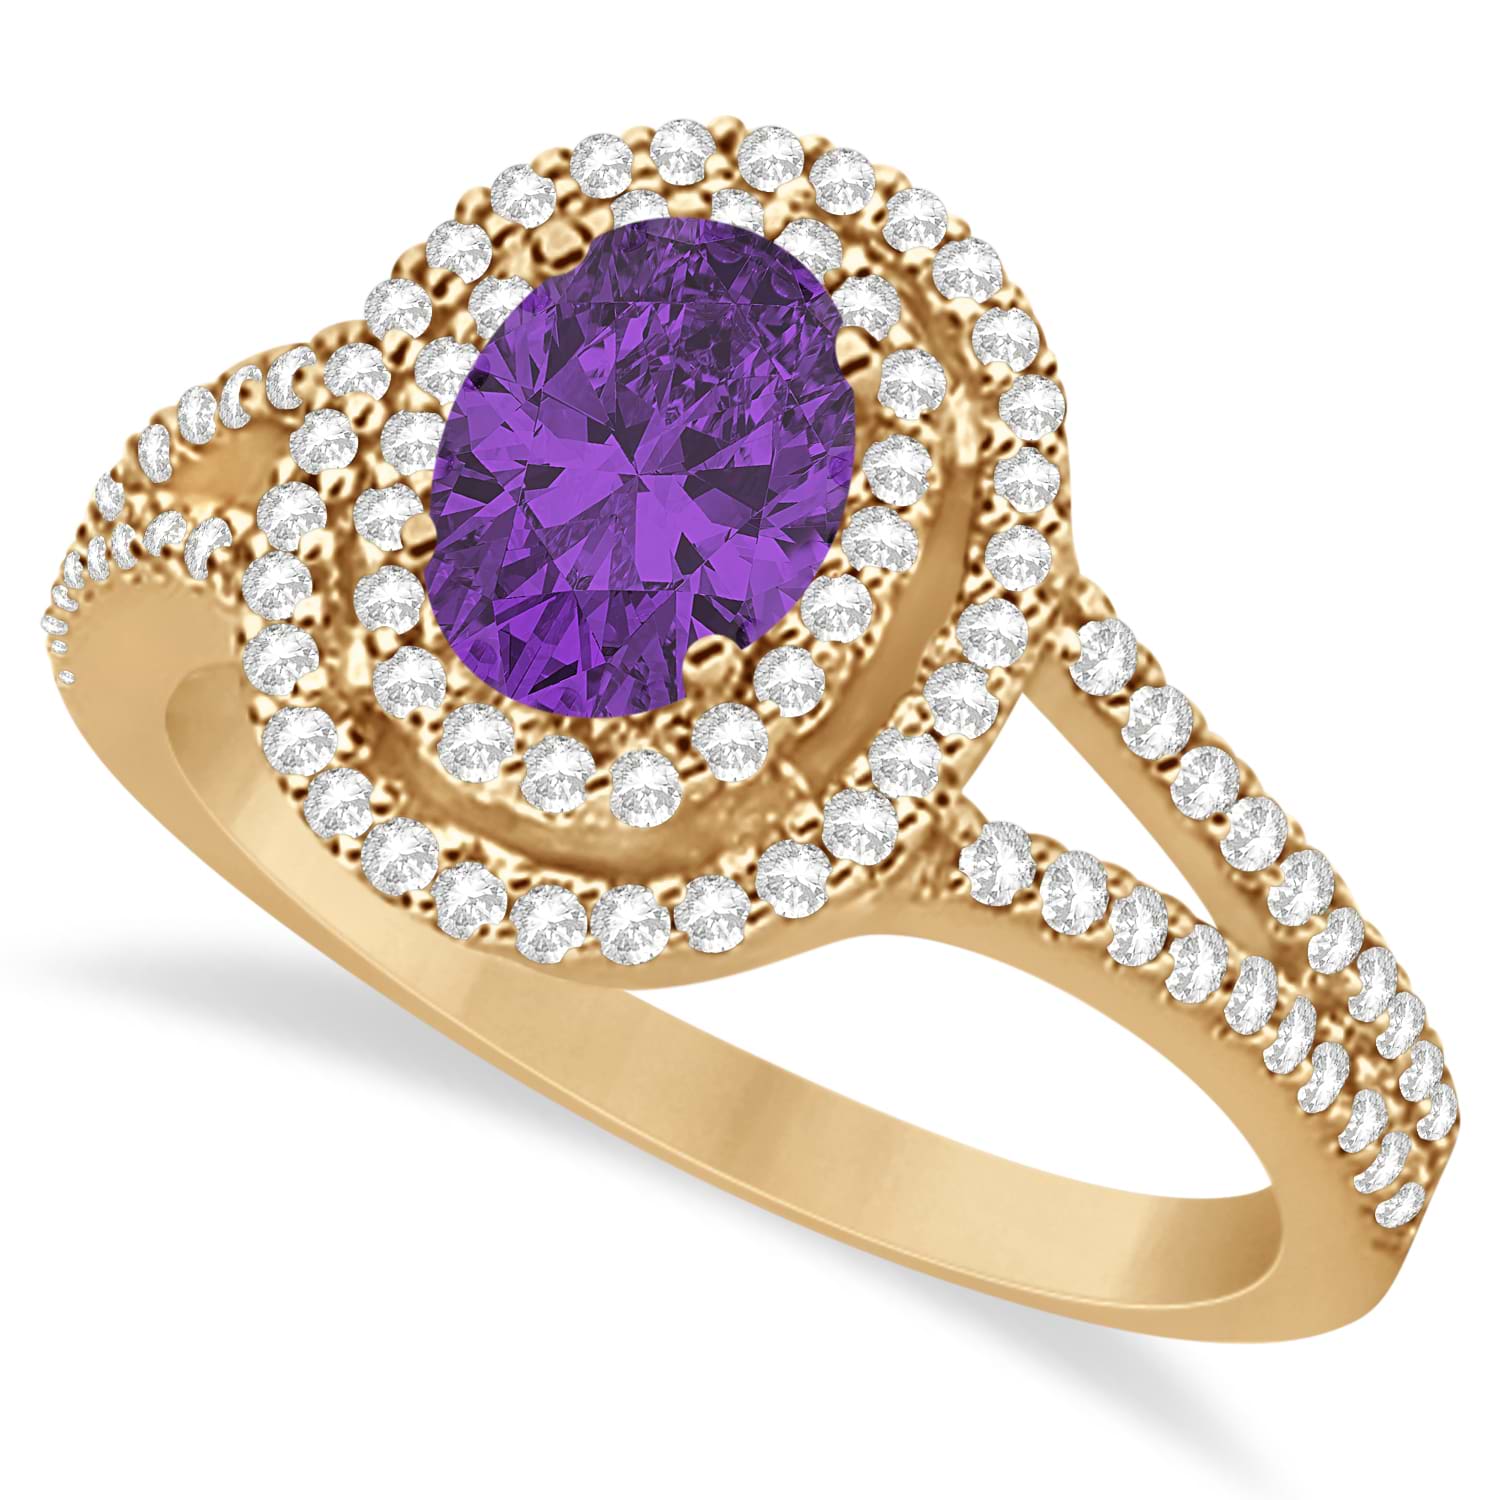 Double Halo Diamond & Amethyst Engagement Ring 14K Rose Gold 1.34ctw